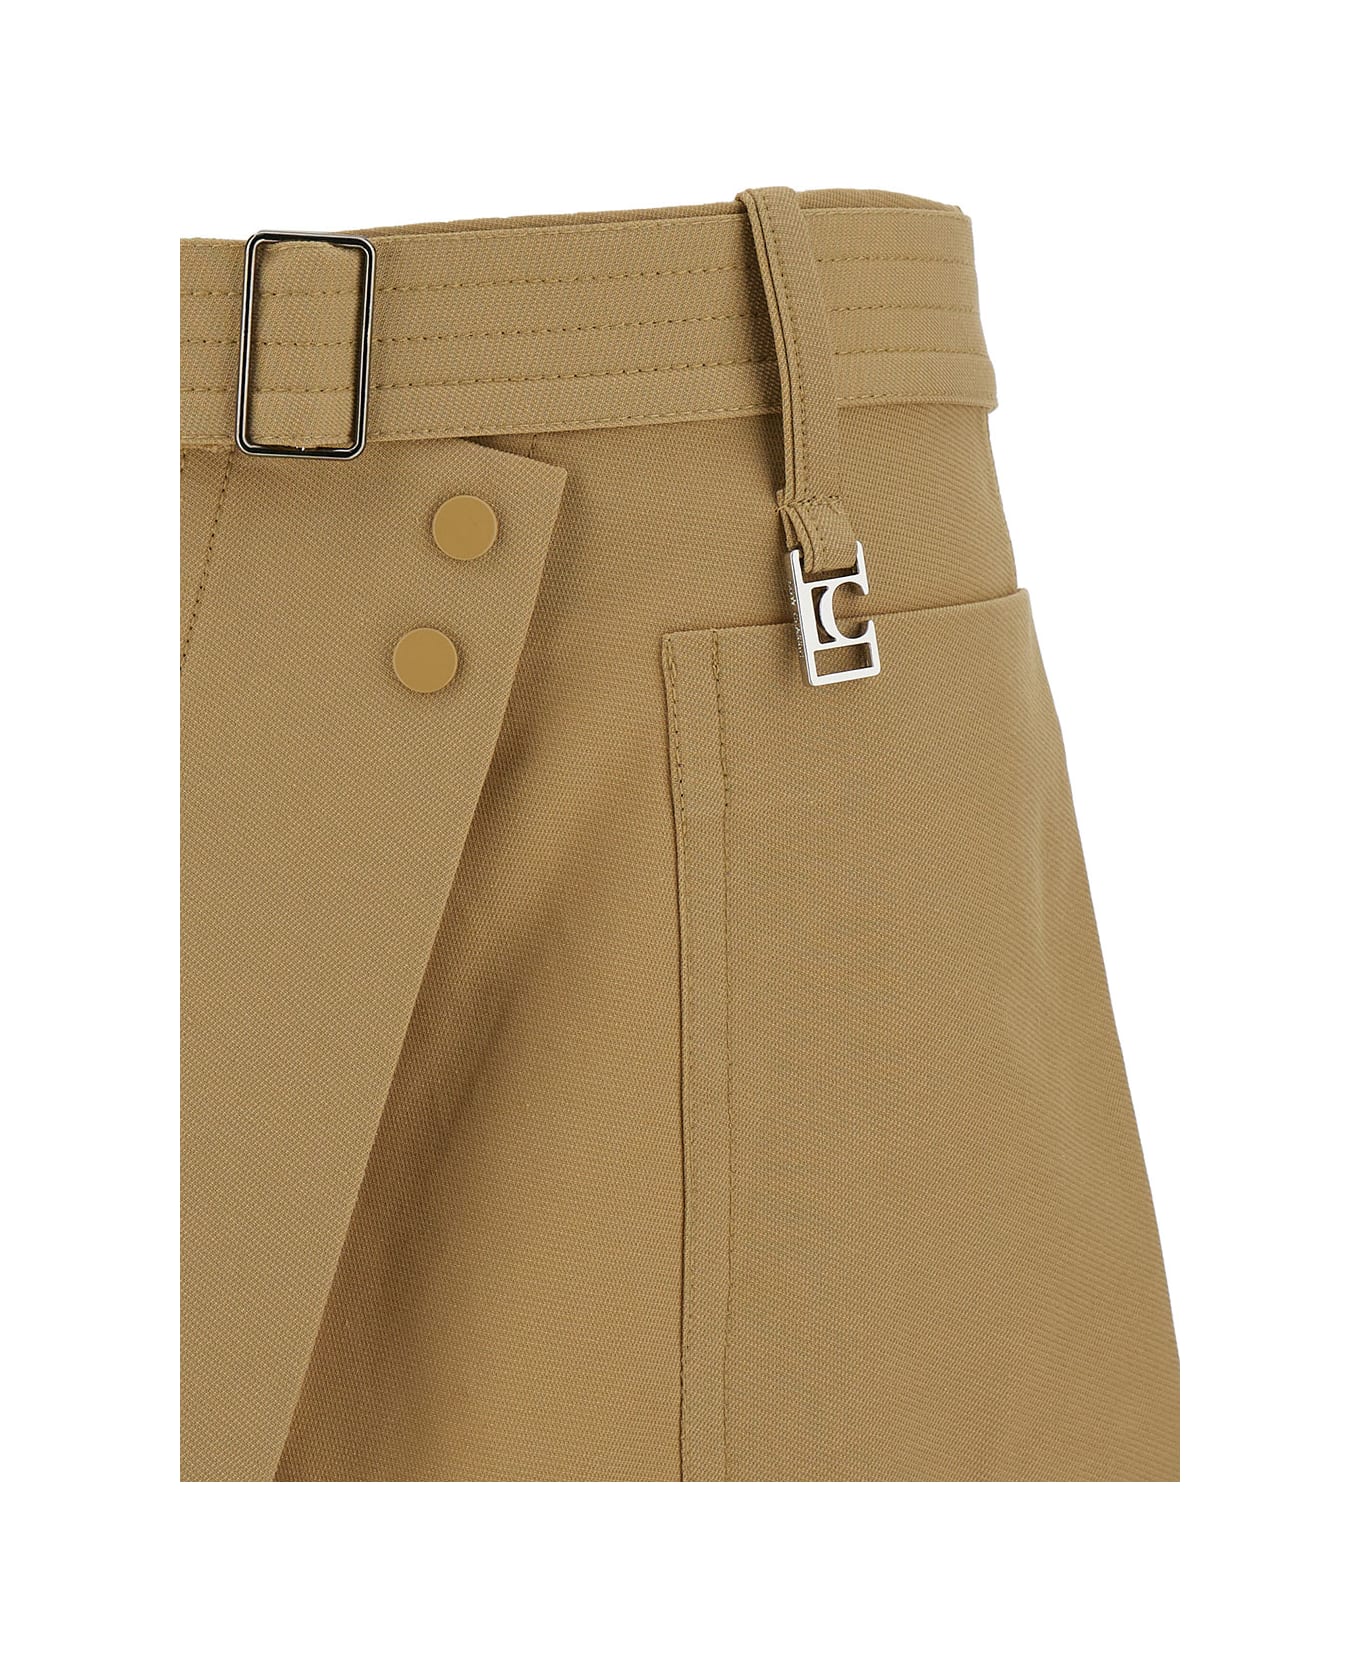 Low Classic Beige Asymmetric Mini-skirt With Logo Charm In Cotton Blend Woman - Beige